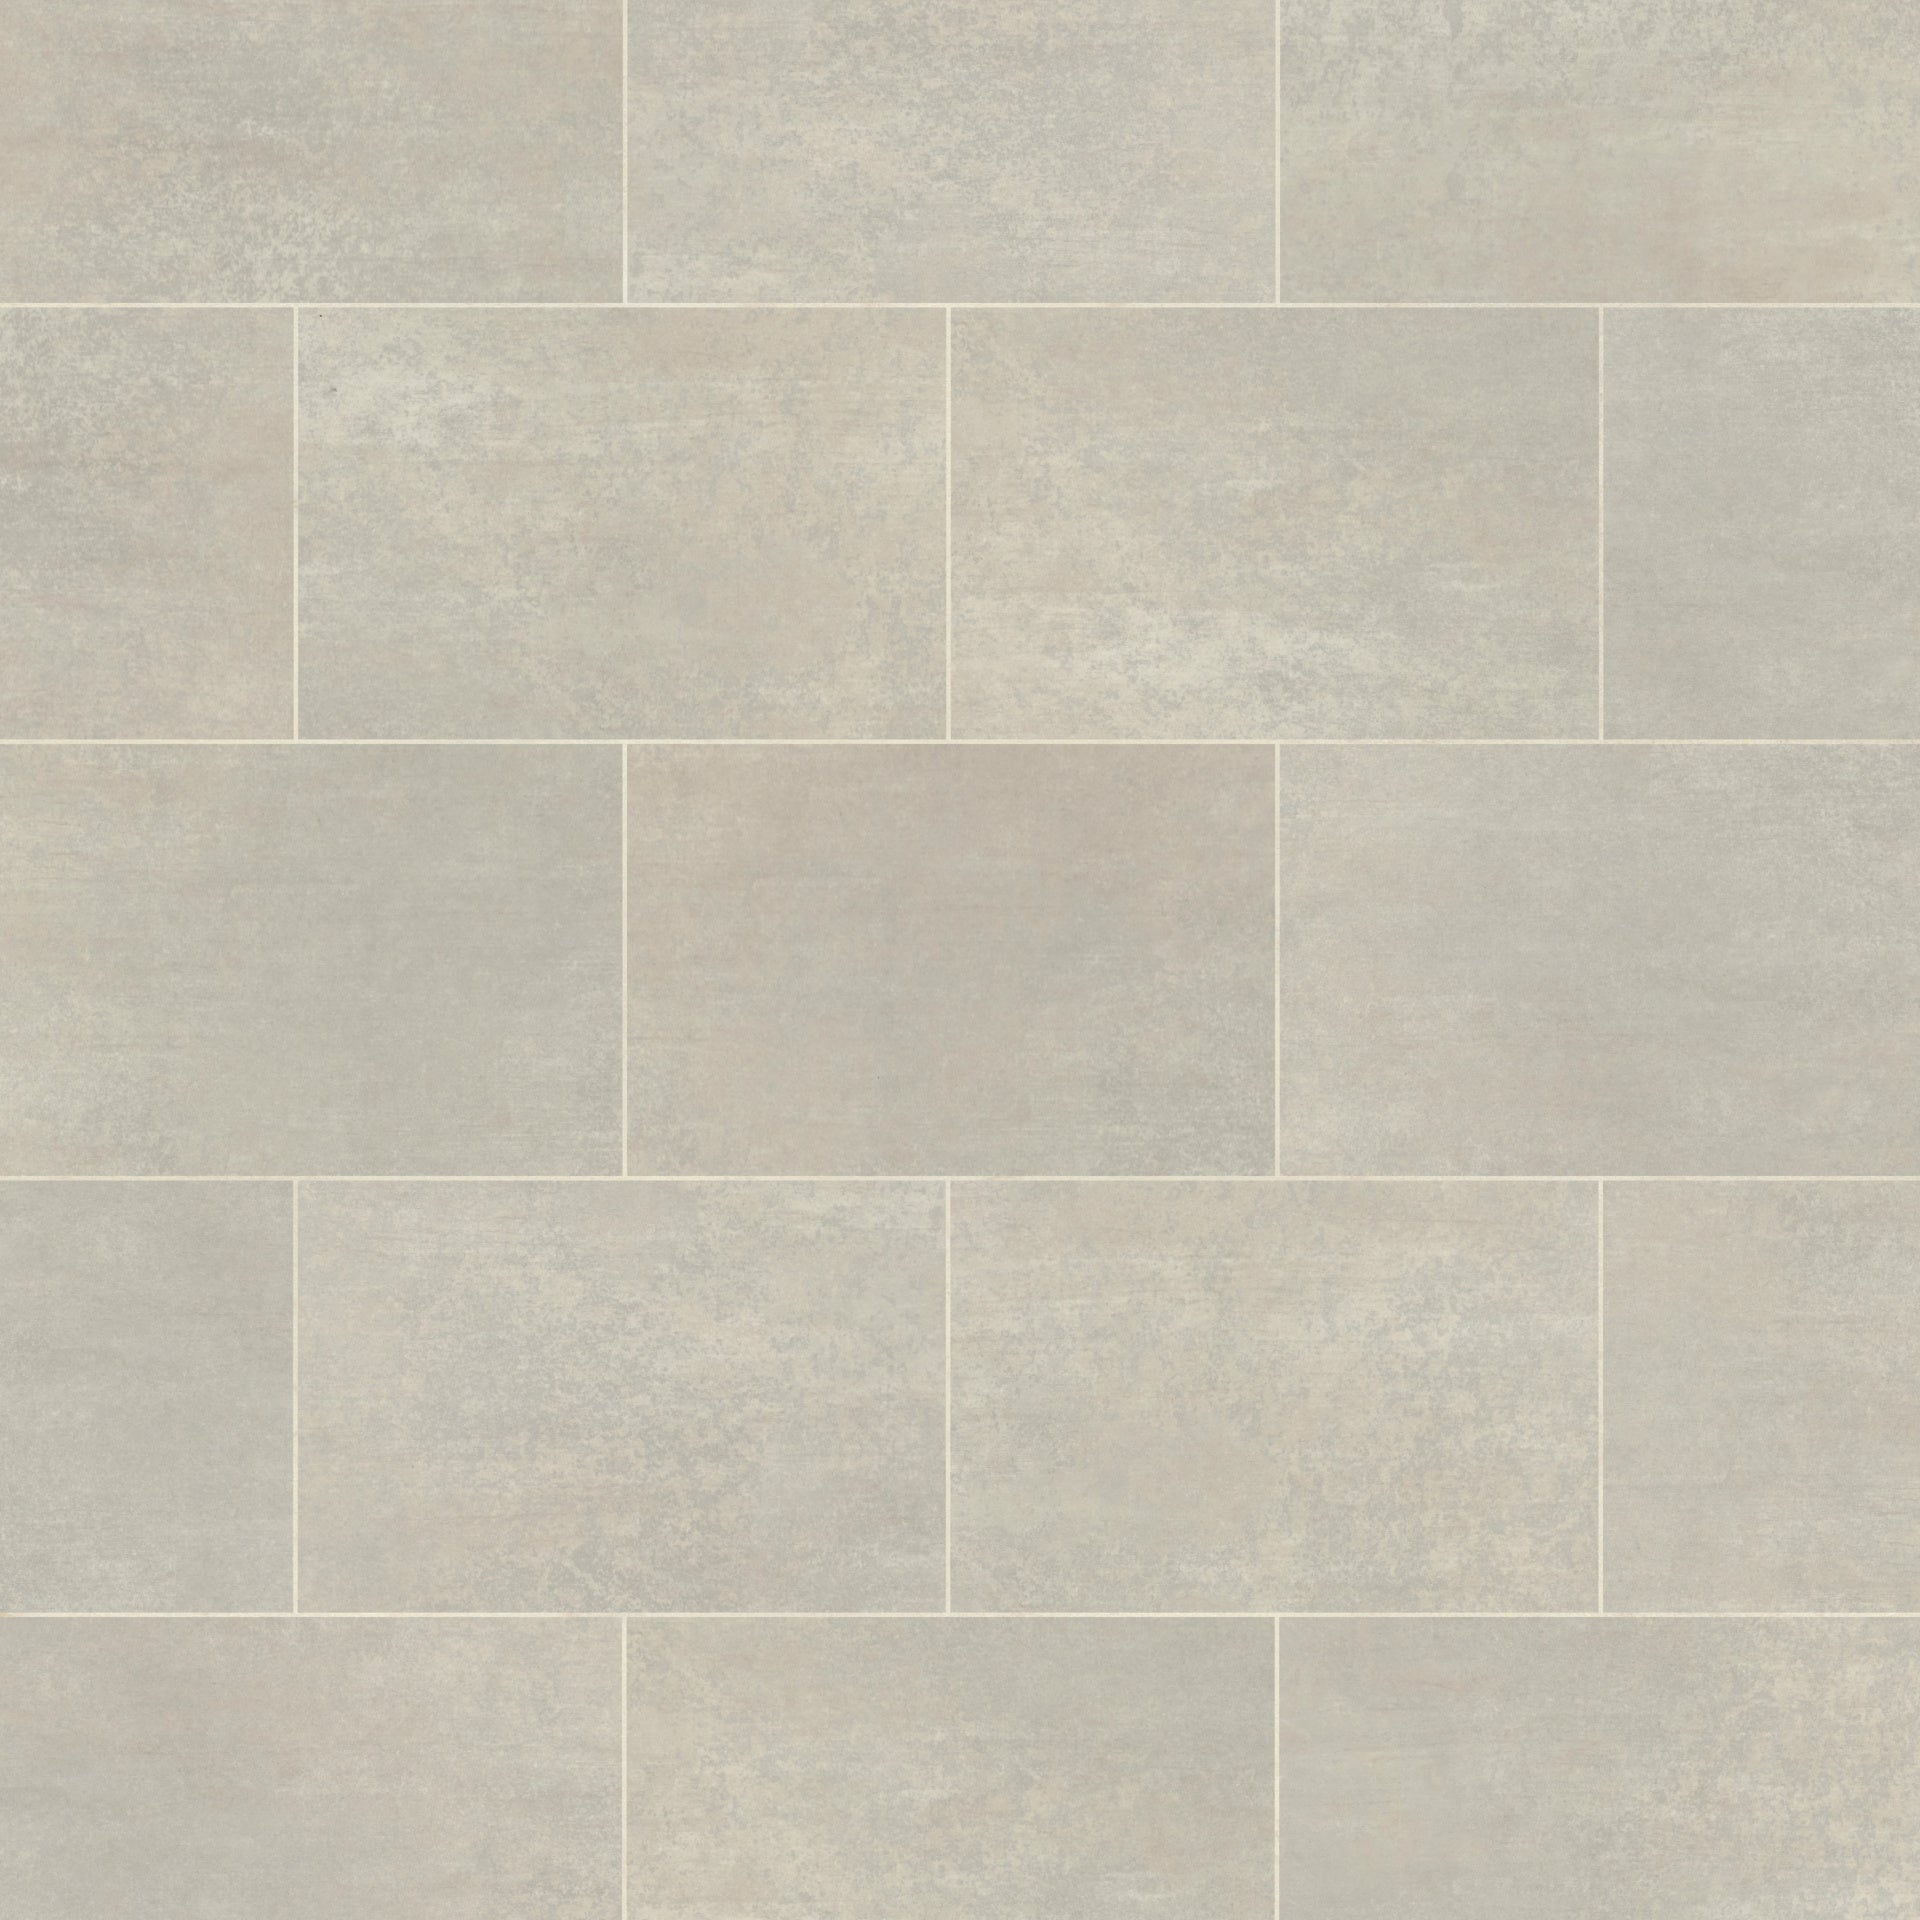 Karndean Knight Tile Dove Grey Concrete ST21 Vinyl Flooring